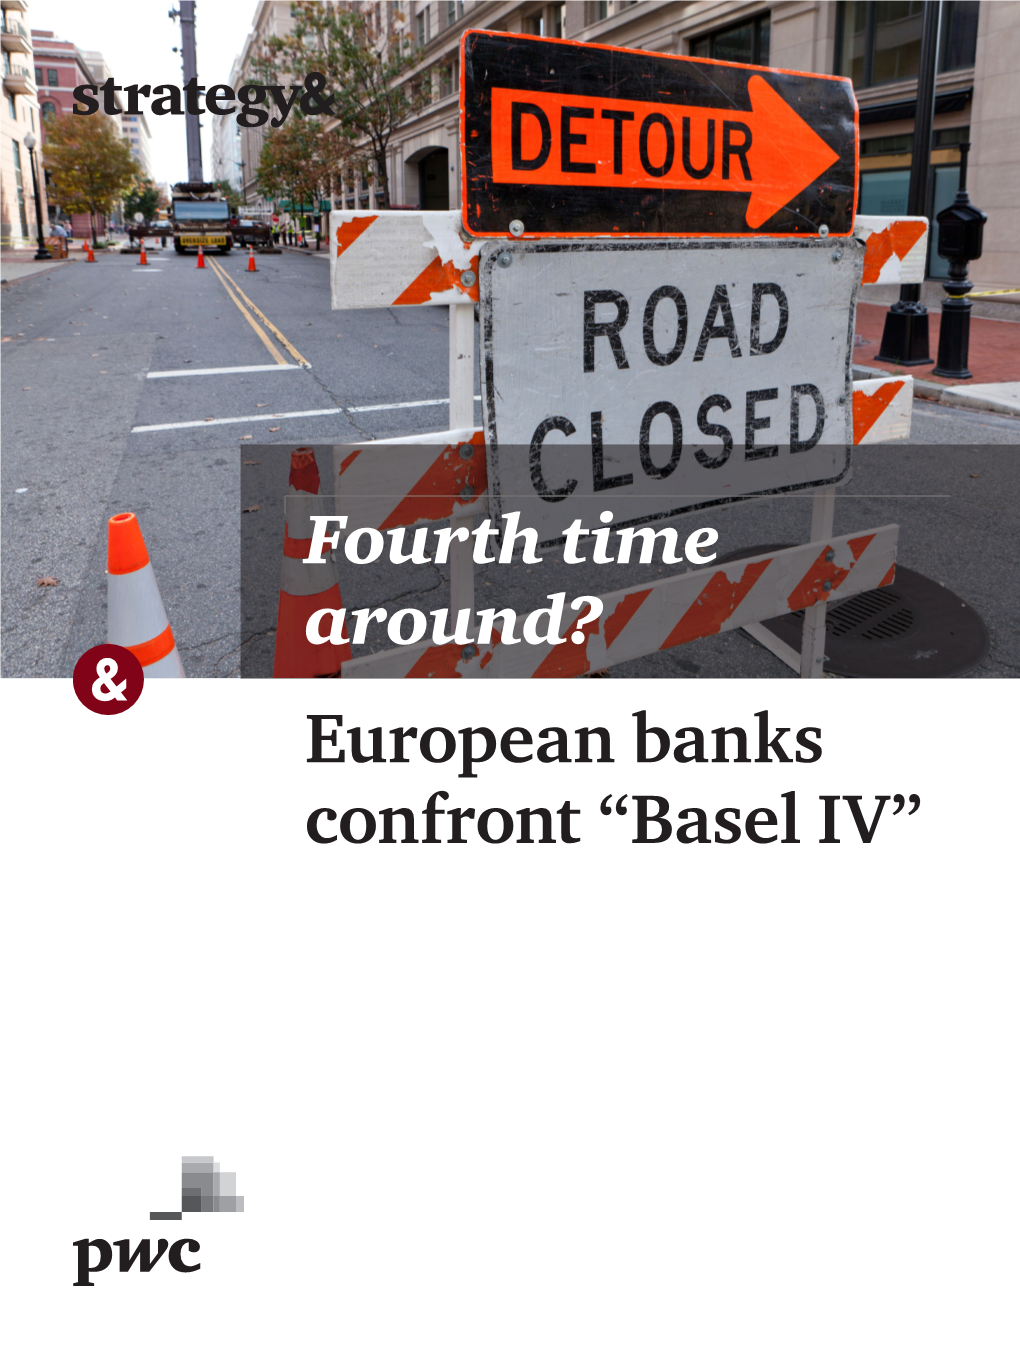 European Banks Confront “Basel IV” Fourth Time Around?